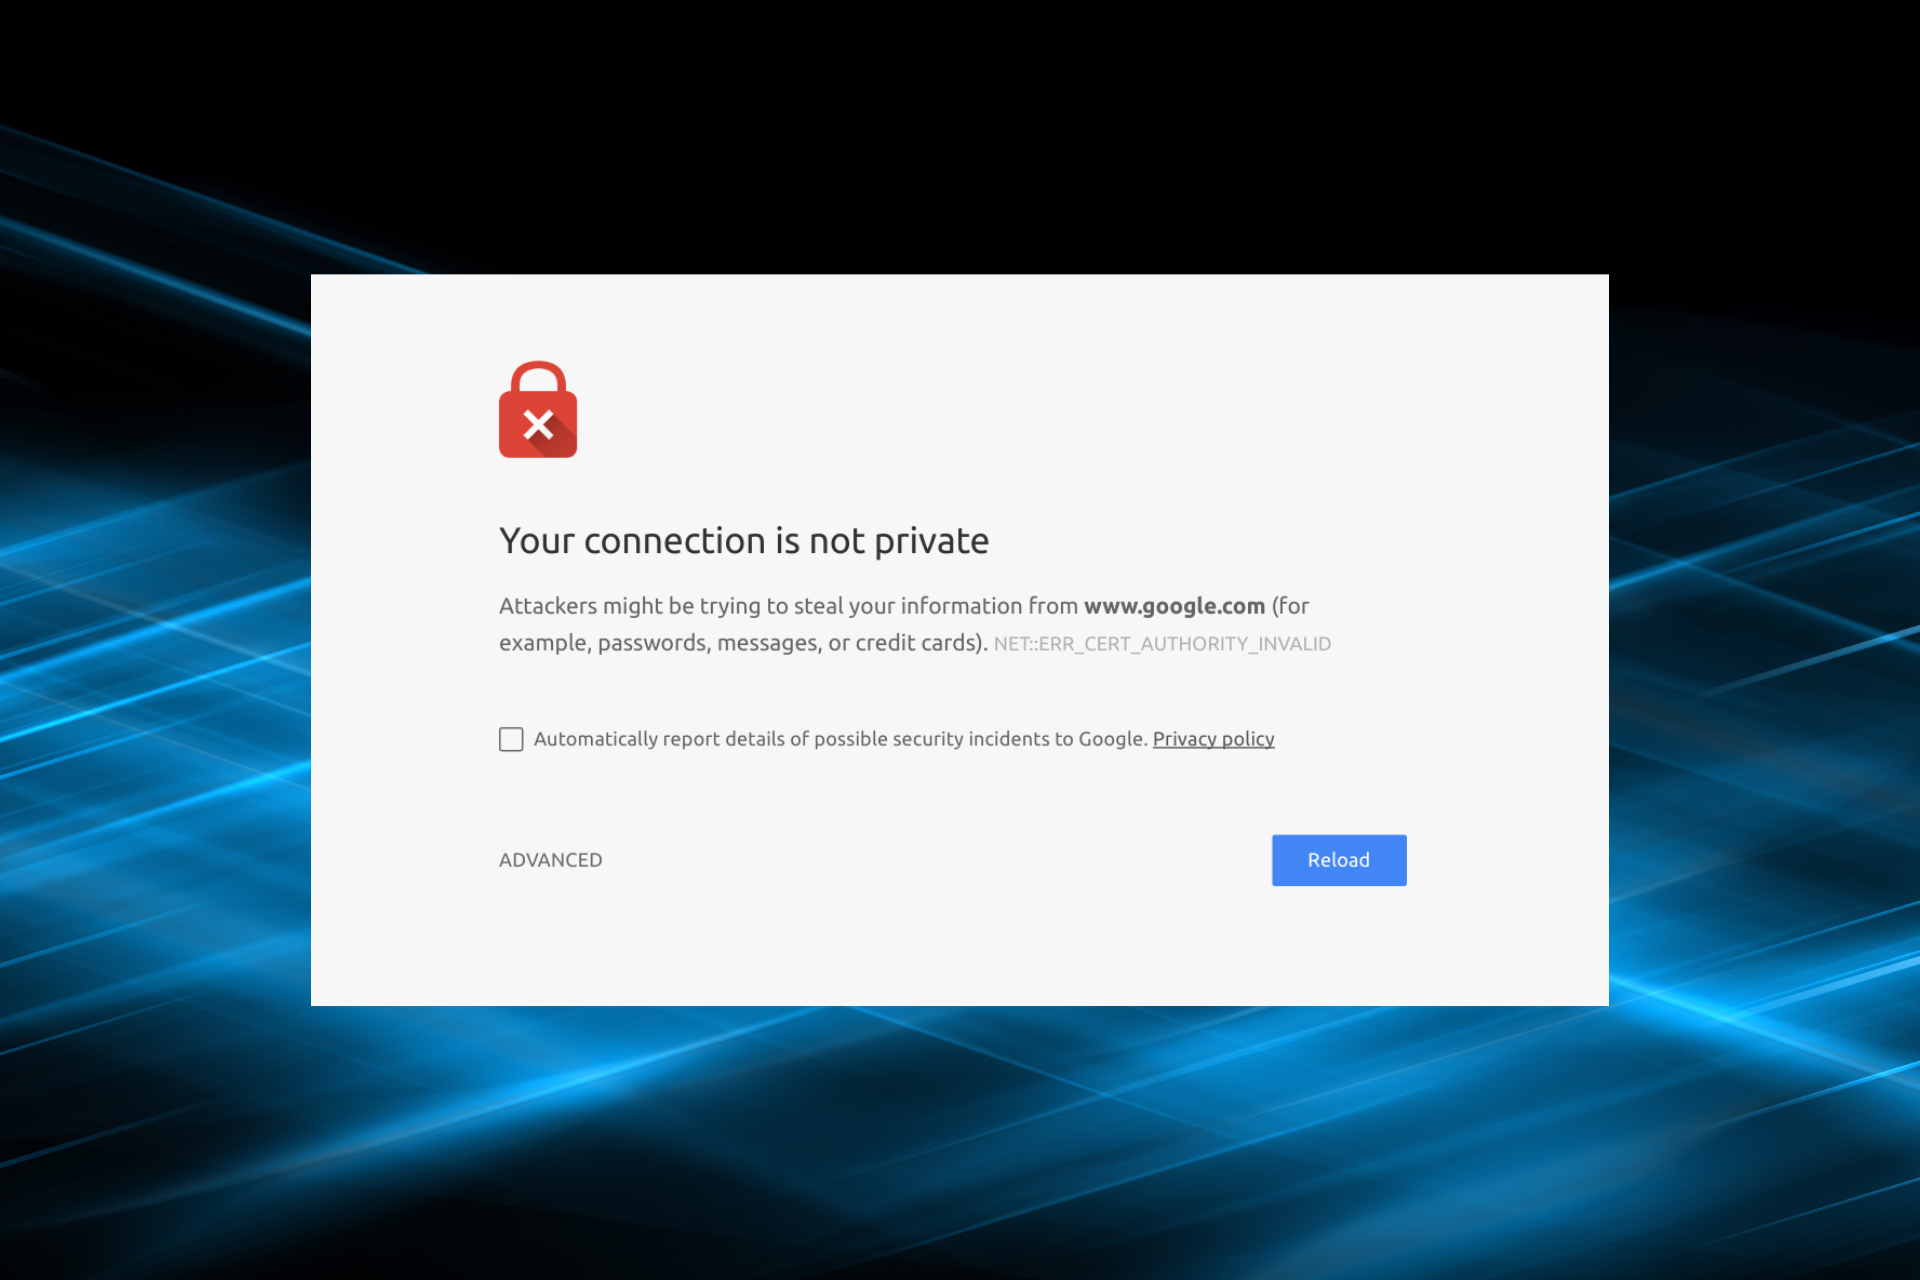 Fix neterr_cert_authority_invalid error in Windows 10 Chrome